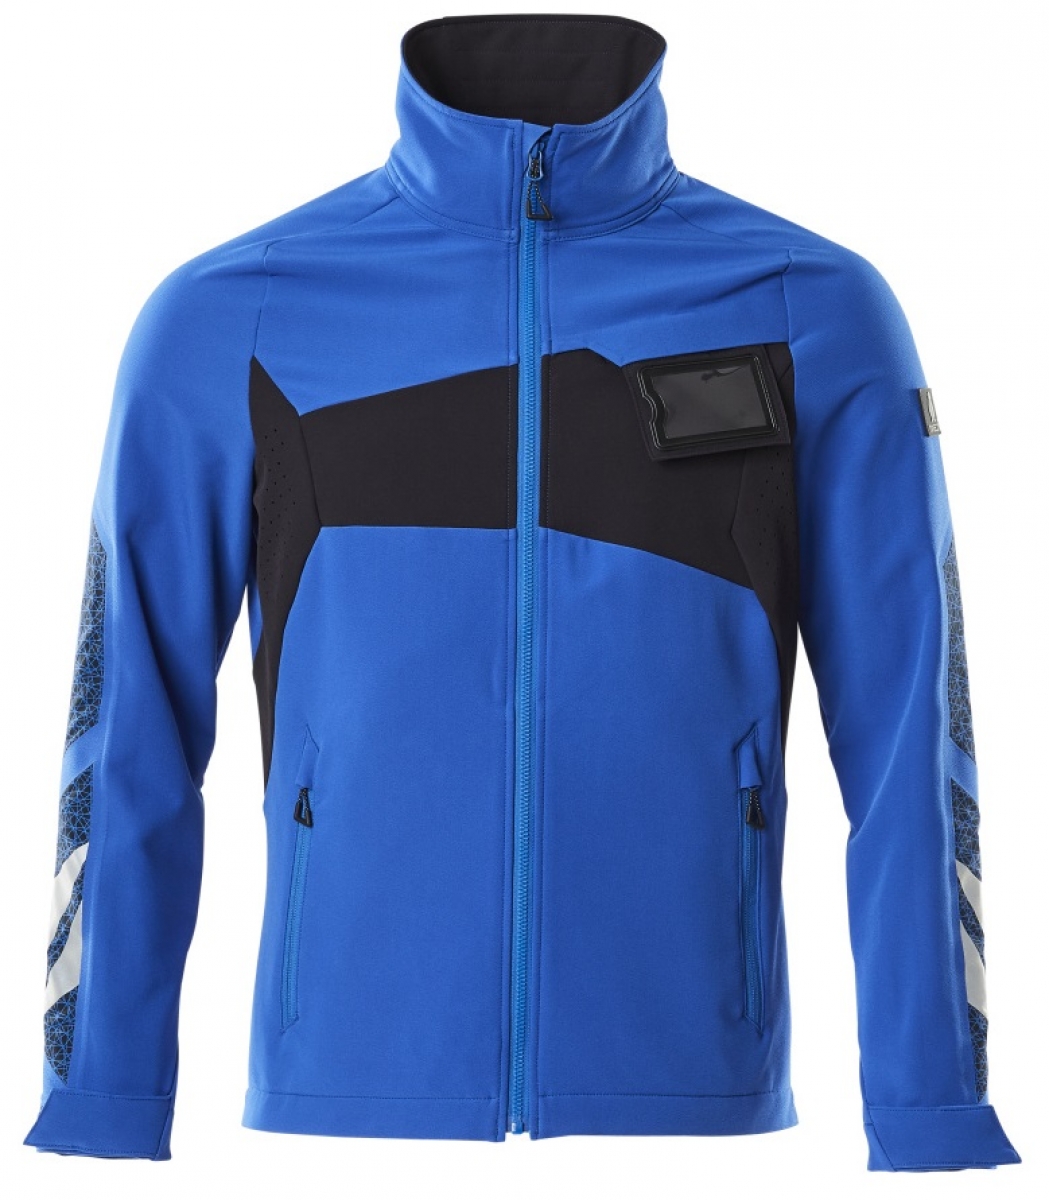 MASCOT-Workwear, Klteschutz, Softshell-Arbeitsjacke, 260 g/m, azurblau/schwarzblau